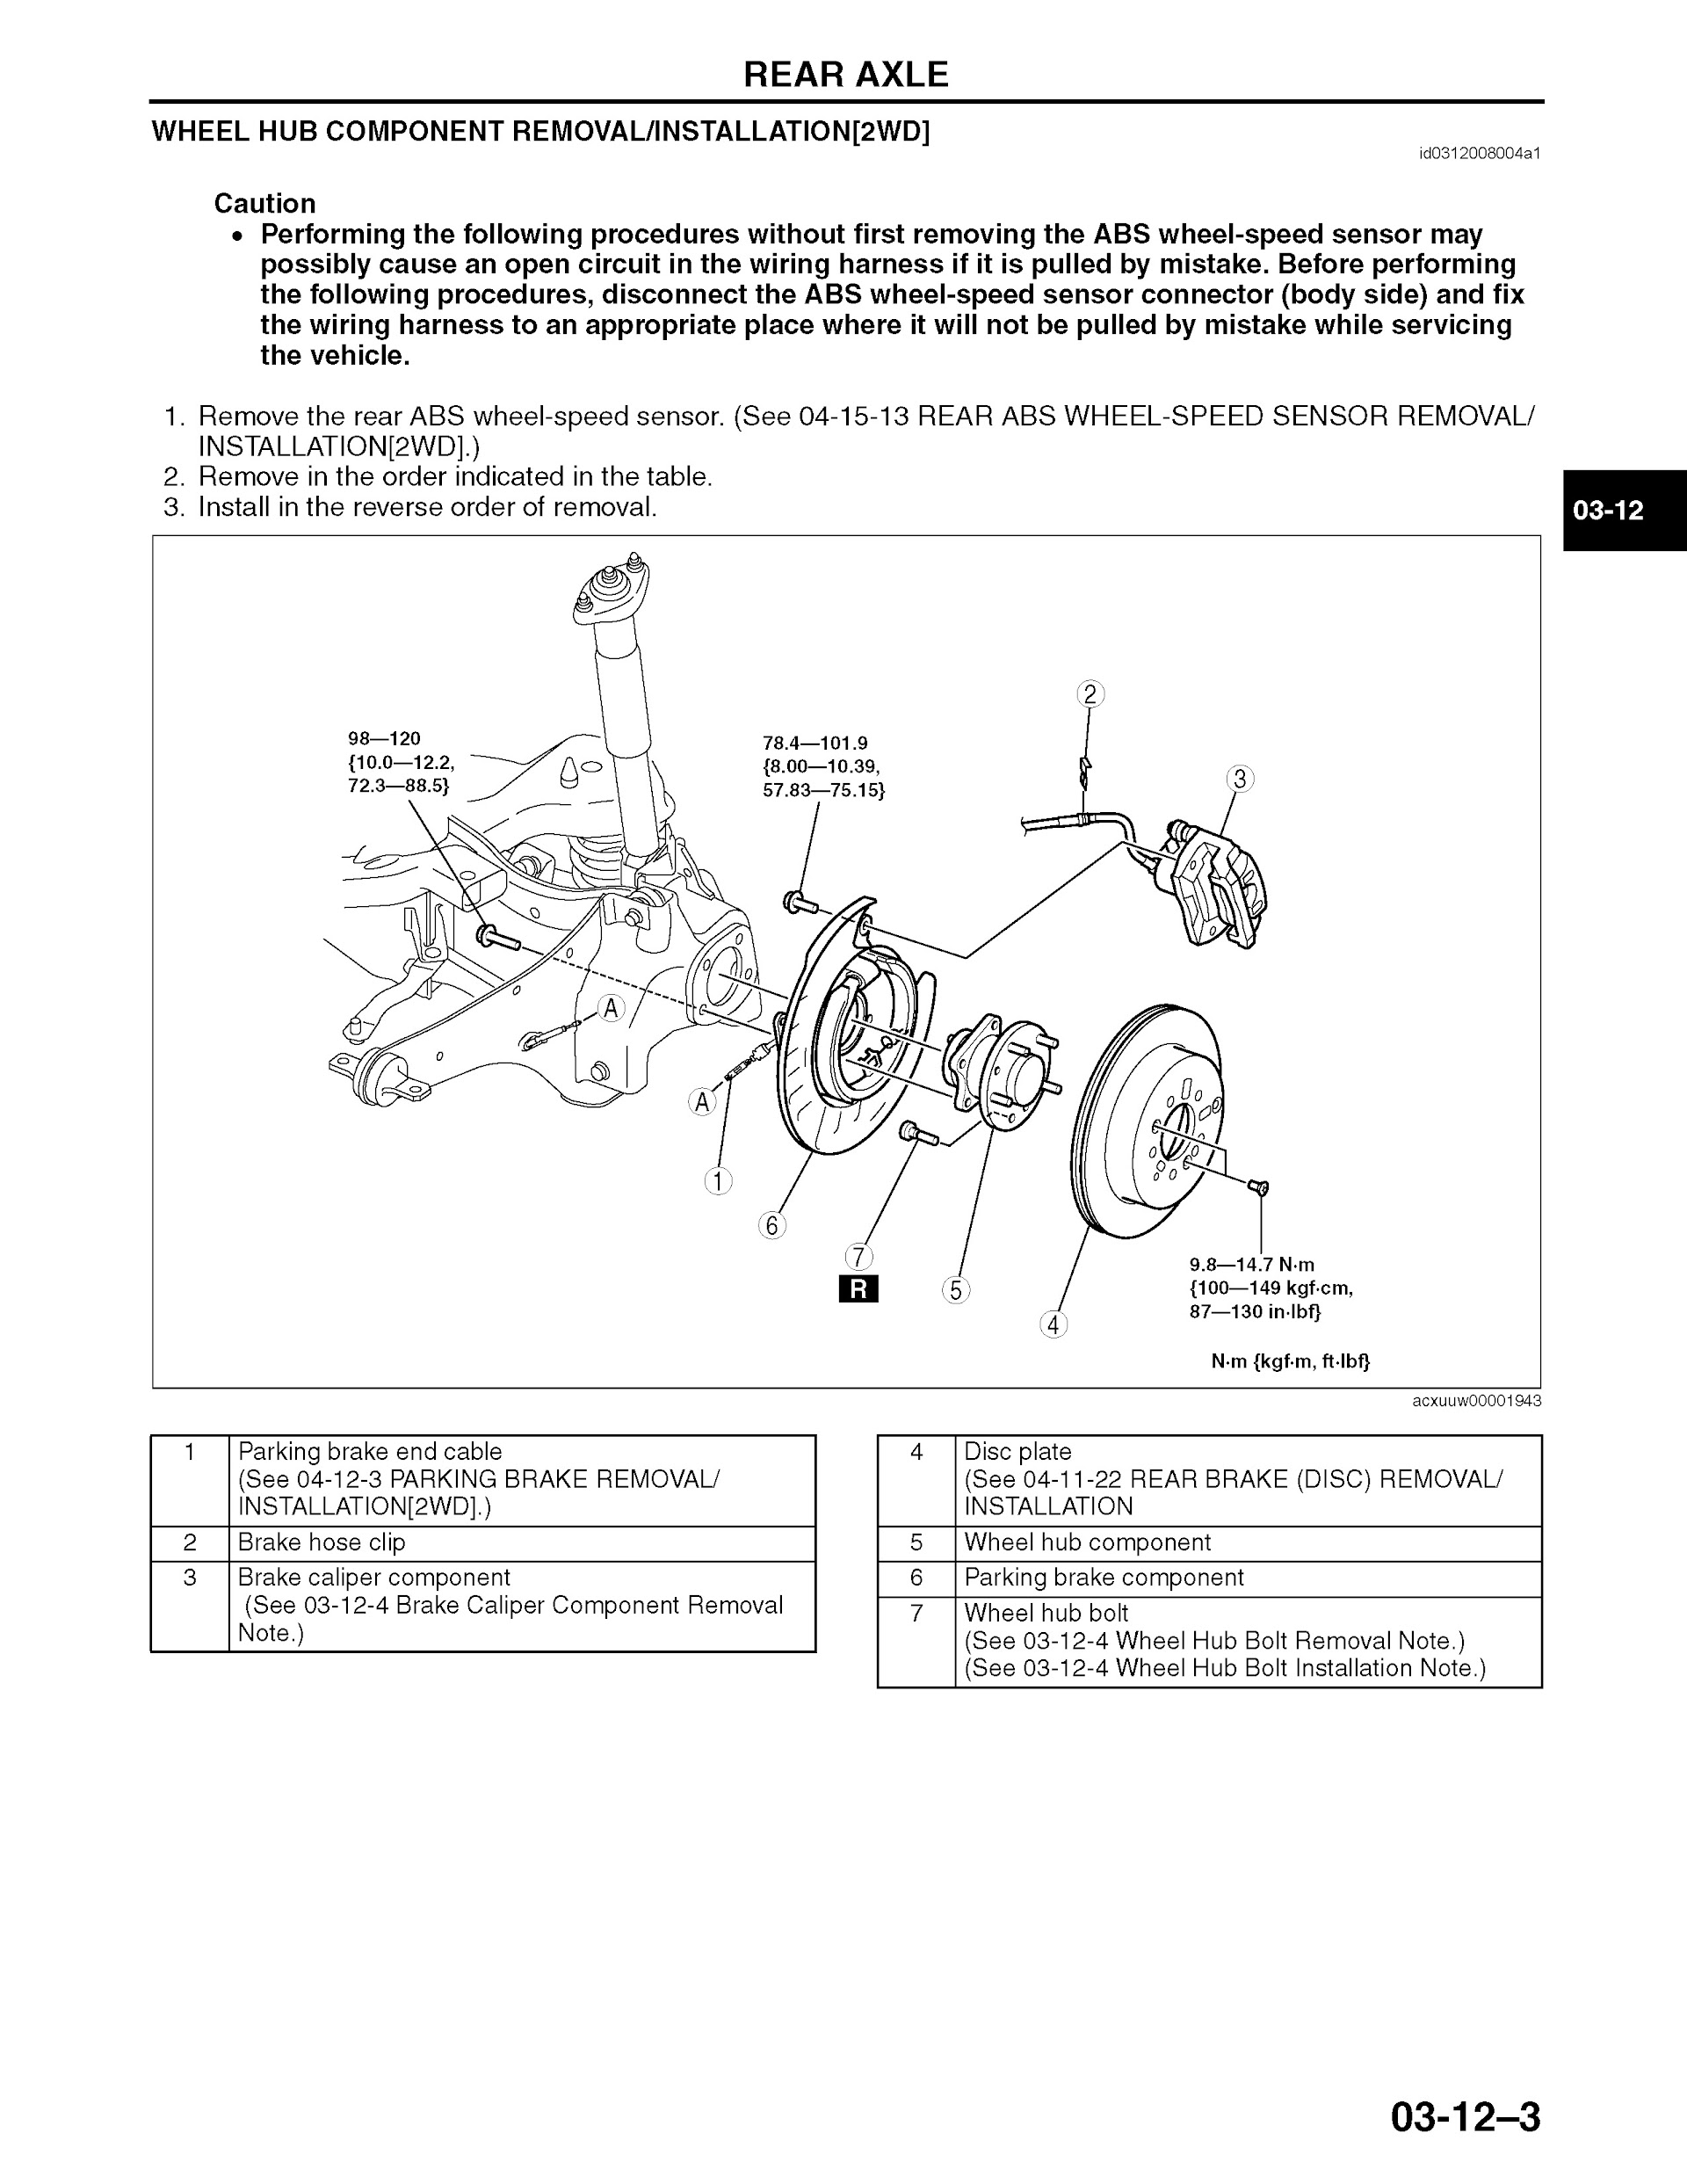 CONTENTS: 2007 Mazda CX-7 Repair Manual, Rear Axle